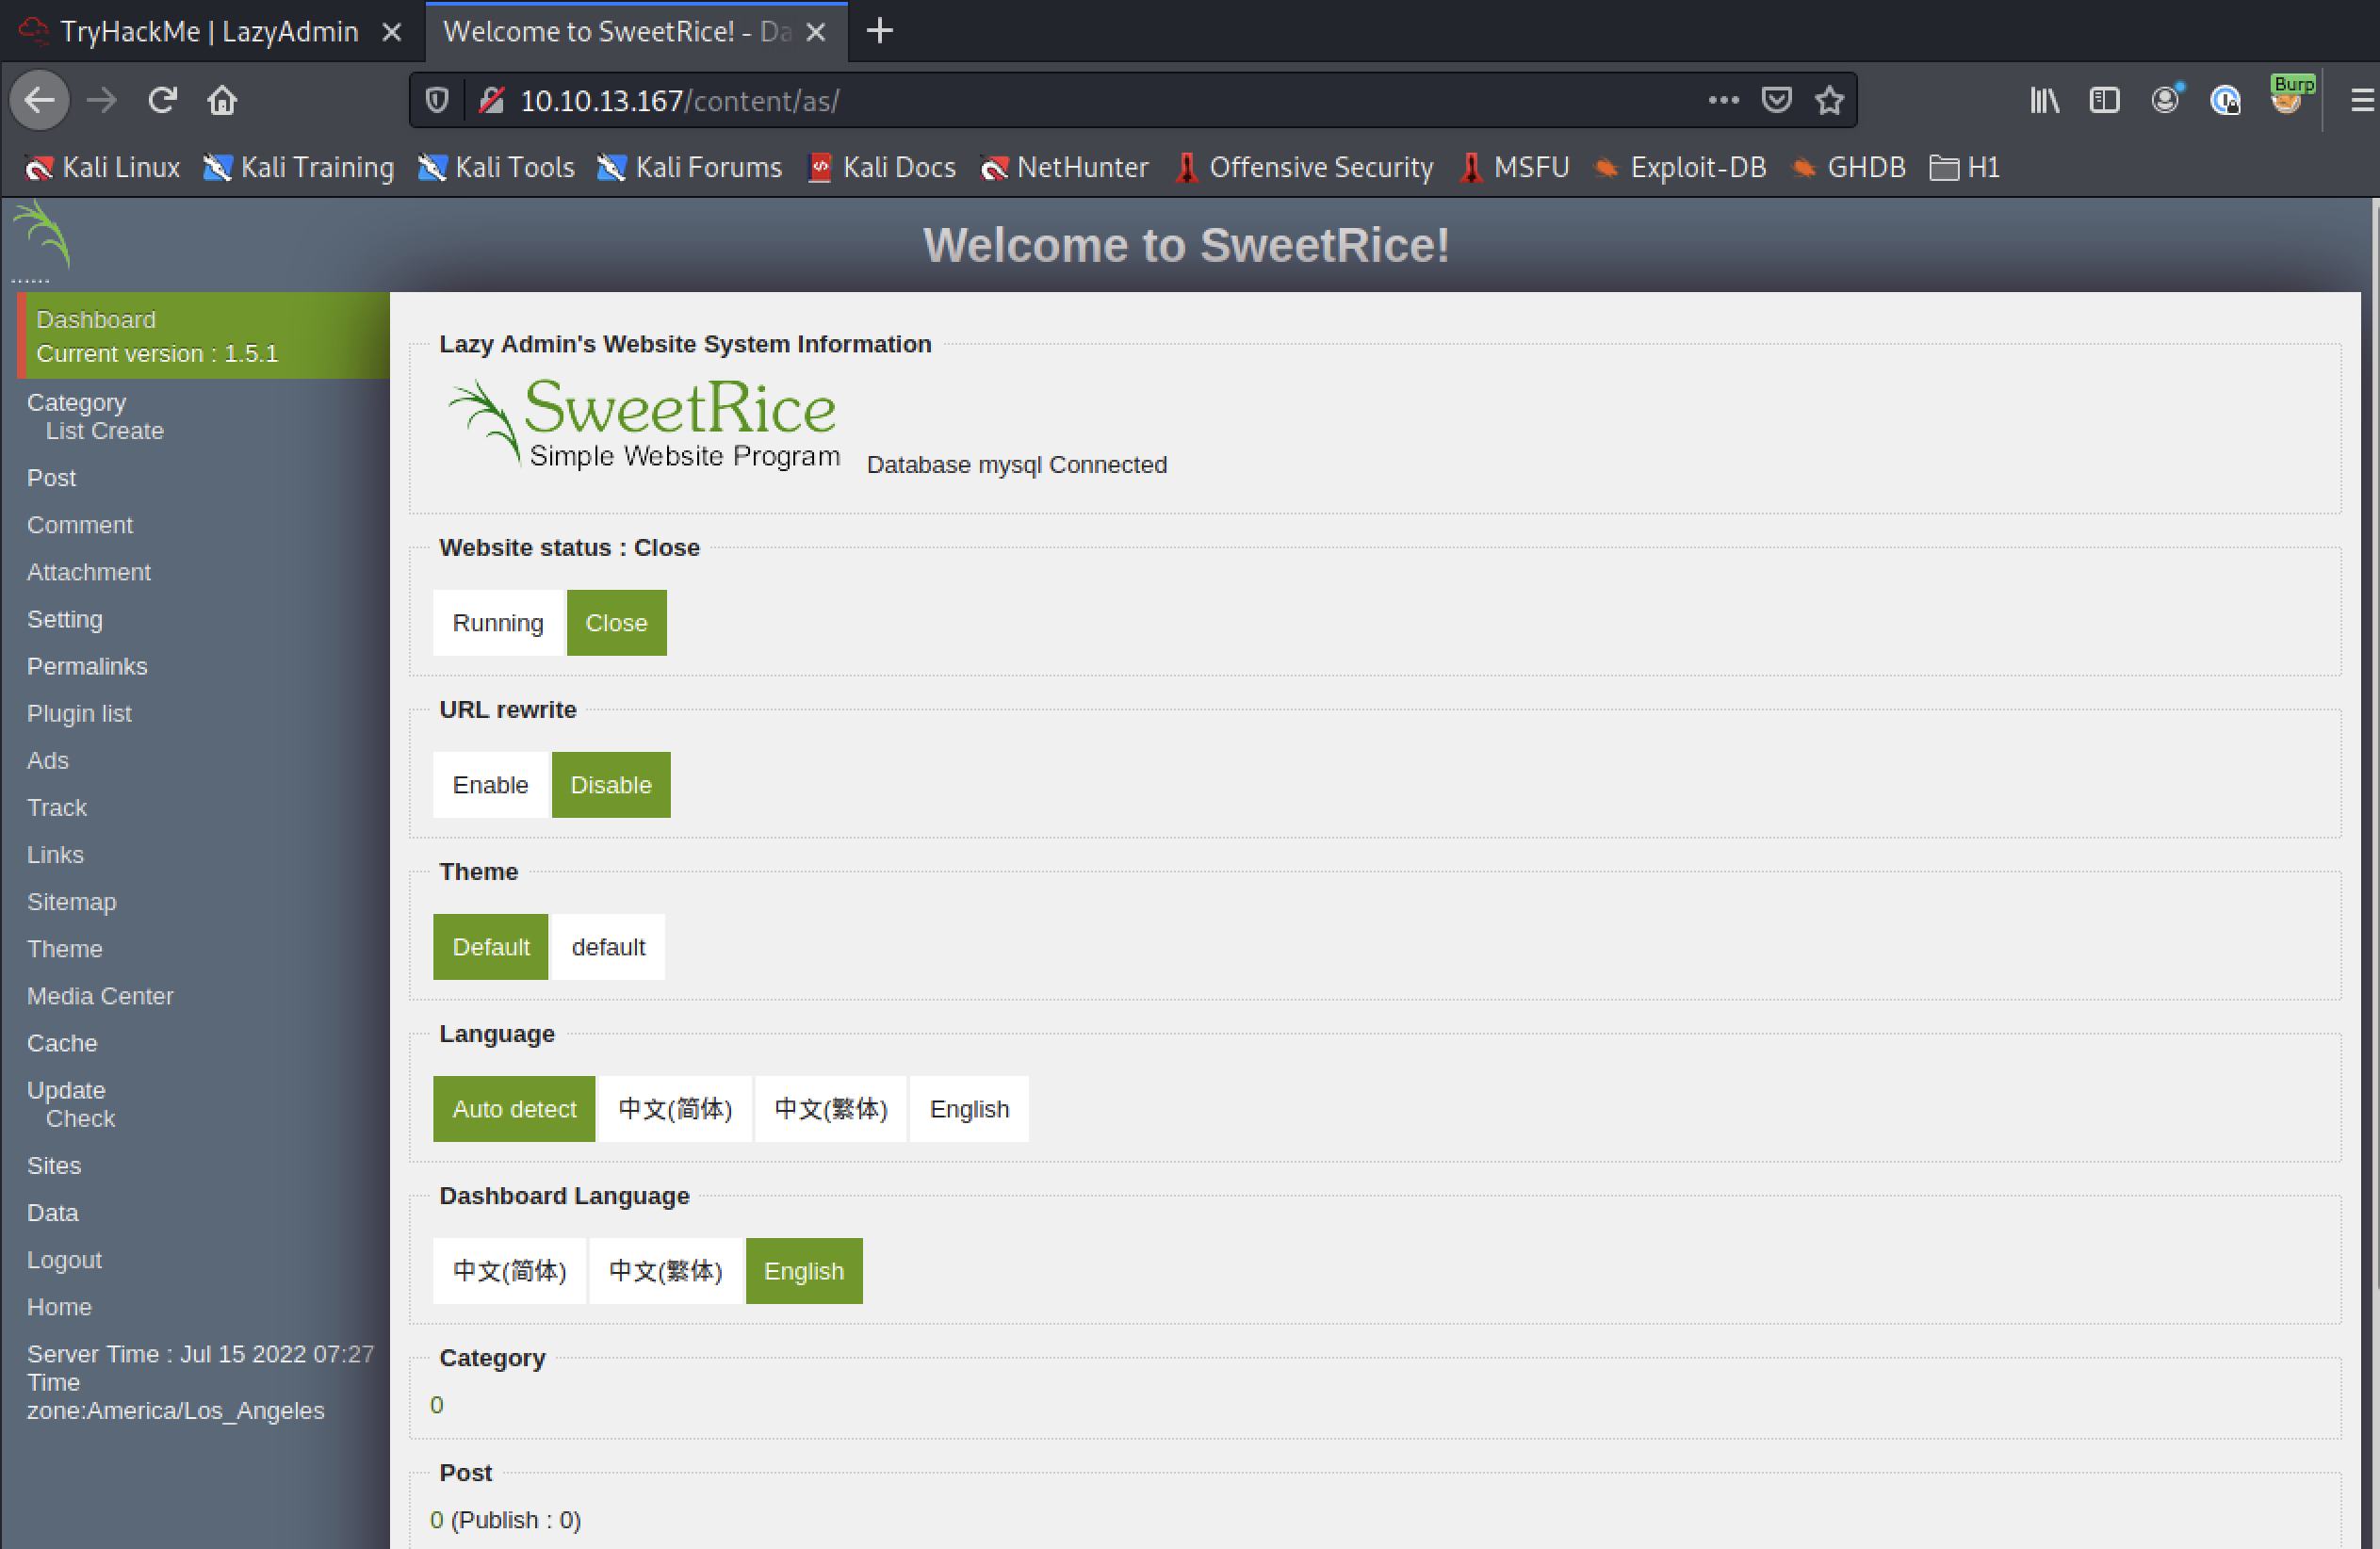 SweetRice CMS Admin Portal